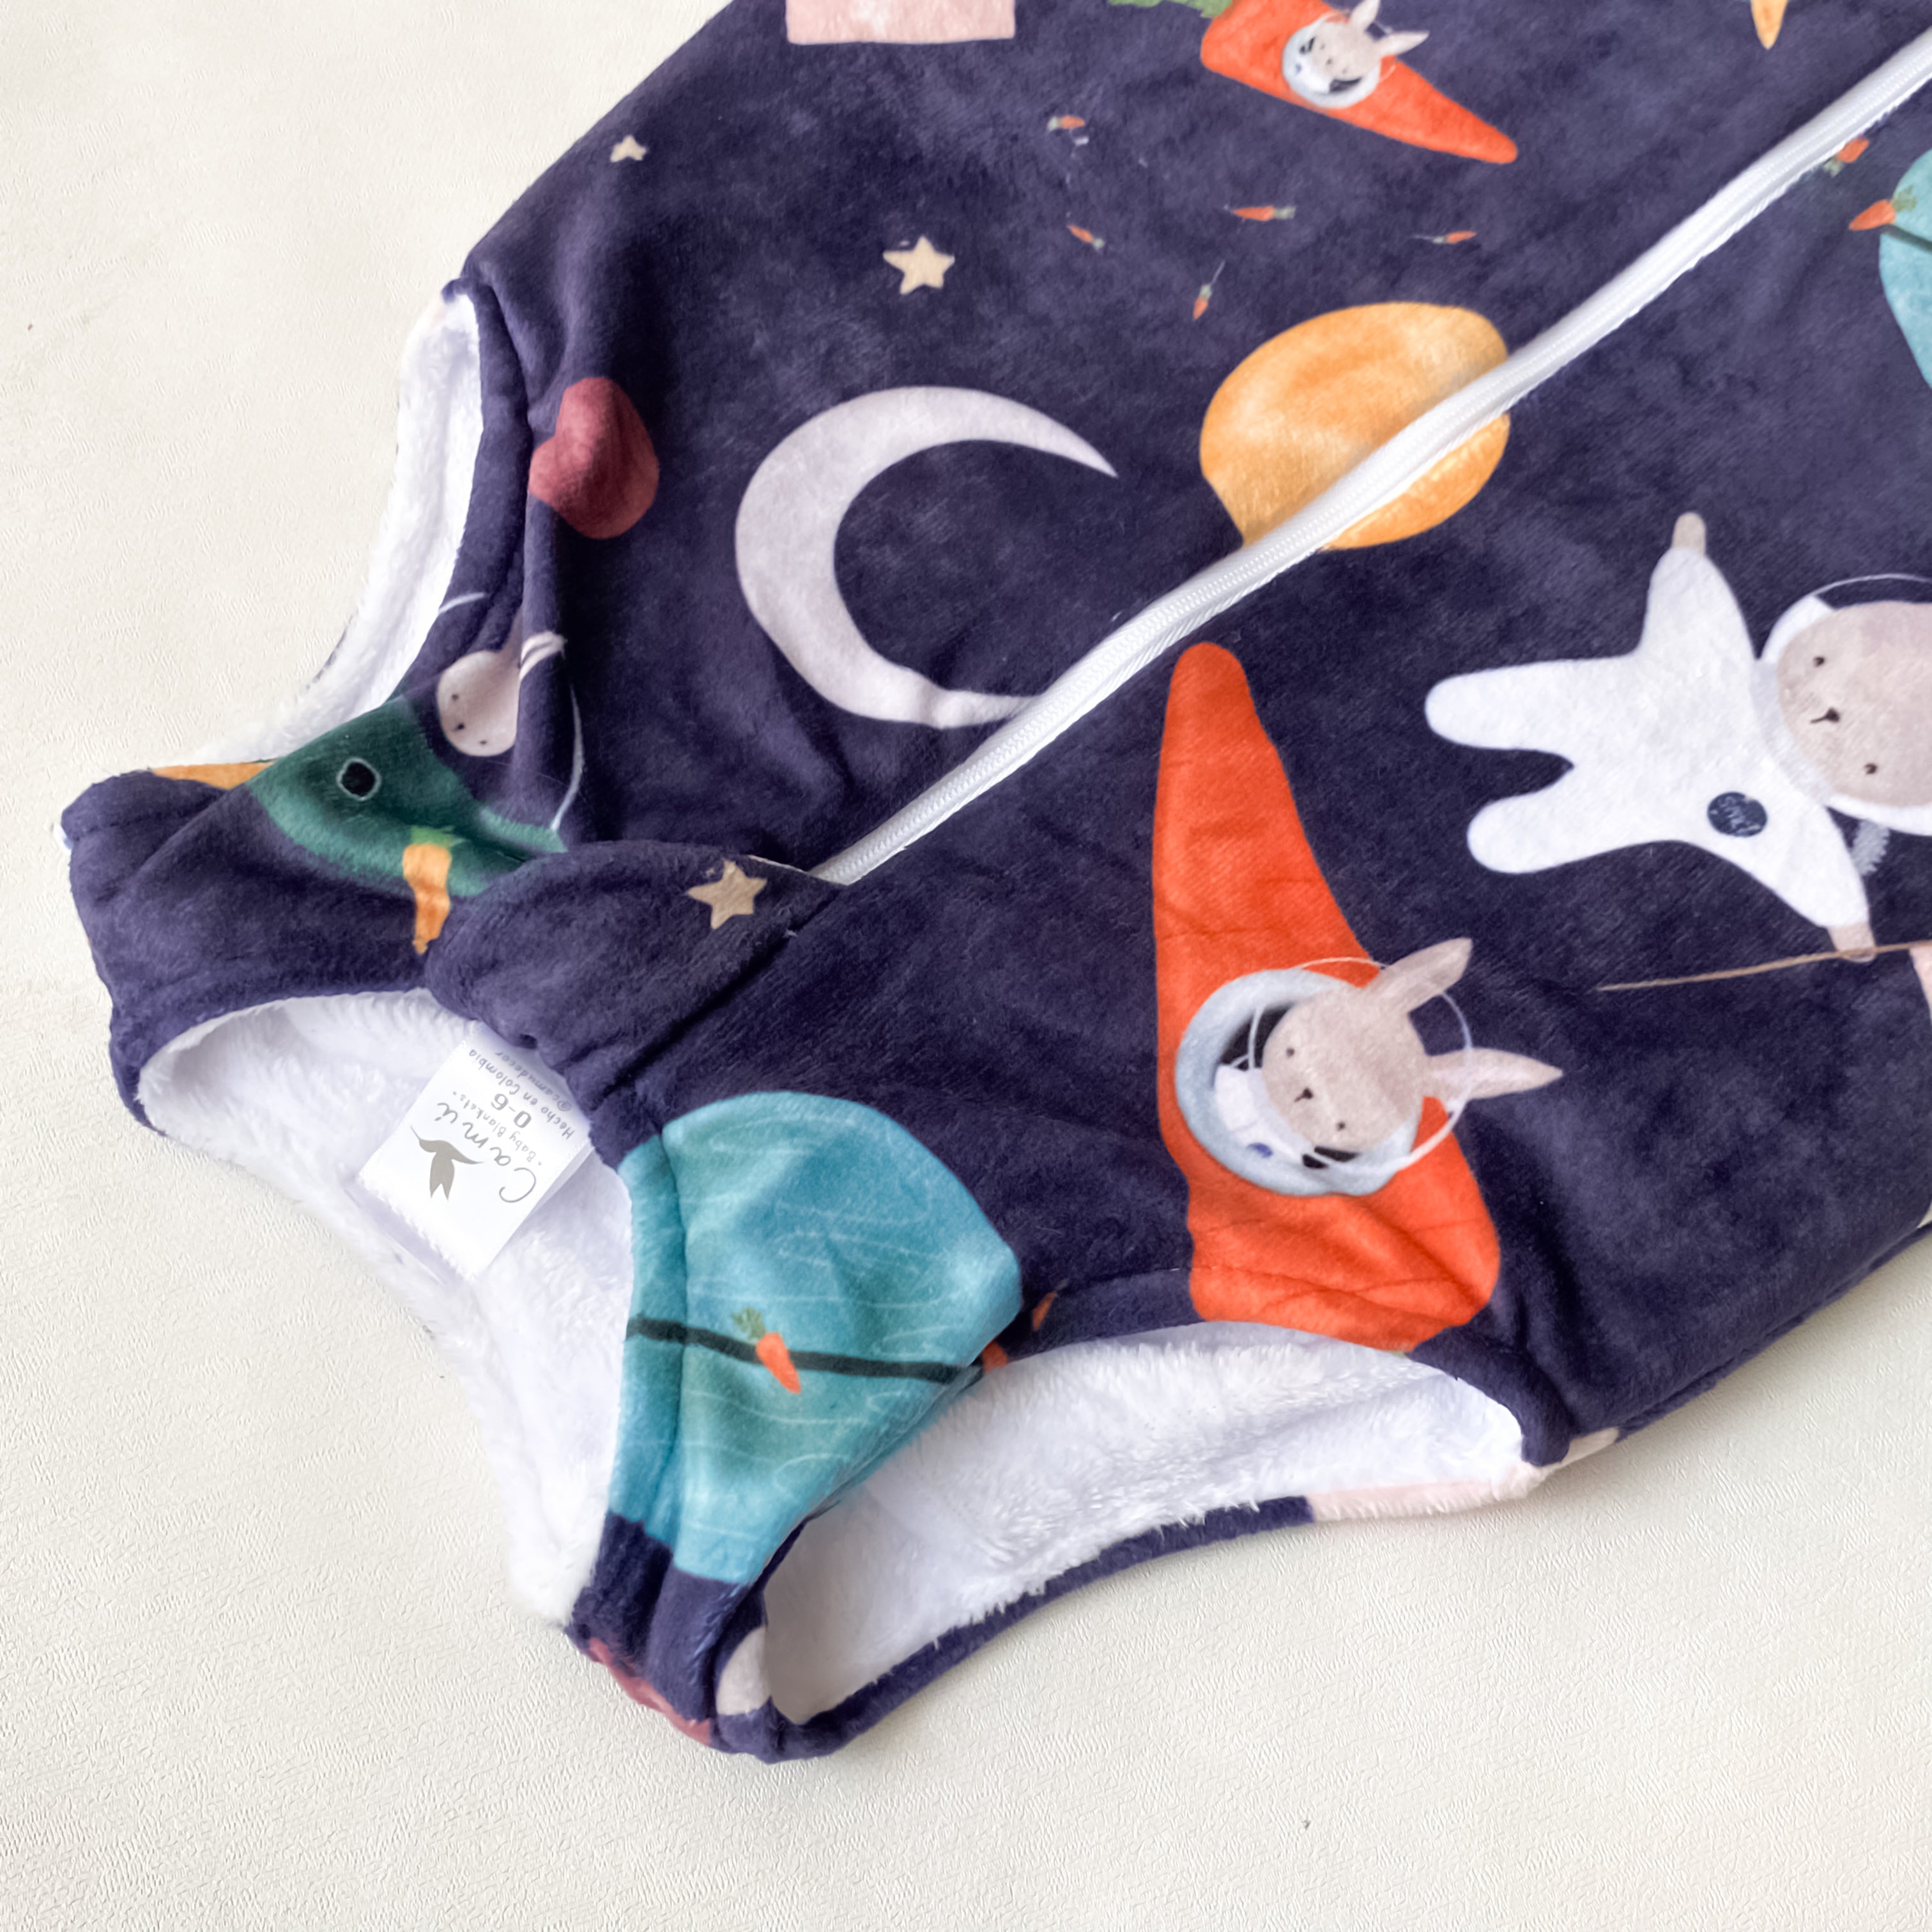 Sleeping bag para Recién Nacido (0-6 meses) - Espacio